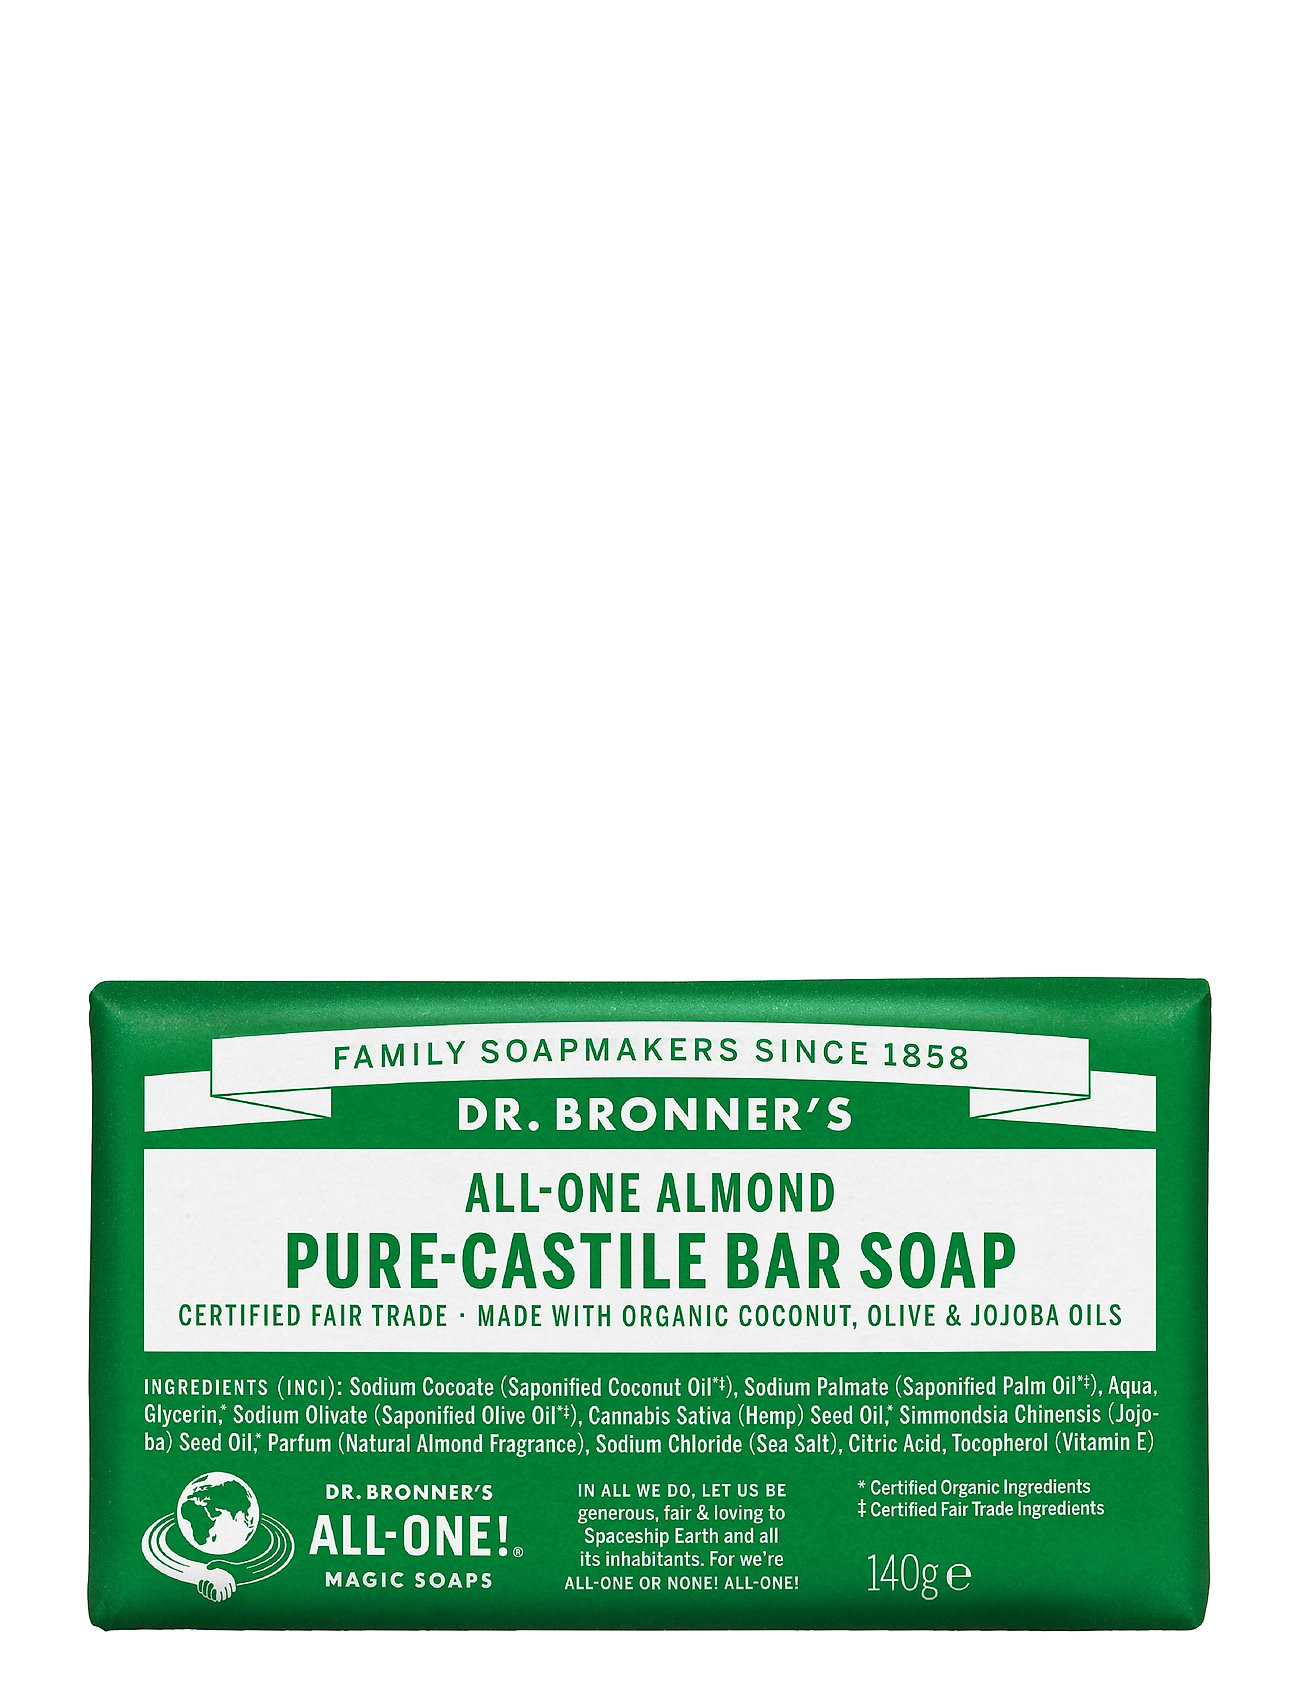 Pure-Castile Bar Soap Almond Beauty Women Skin Care Body Nude Dr. Bronner’s